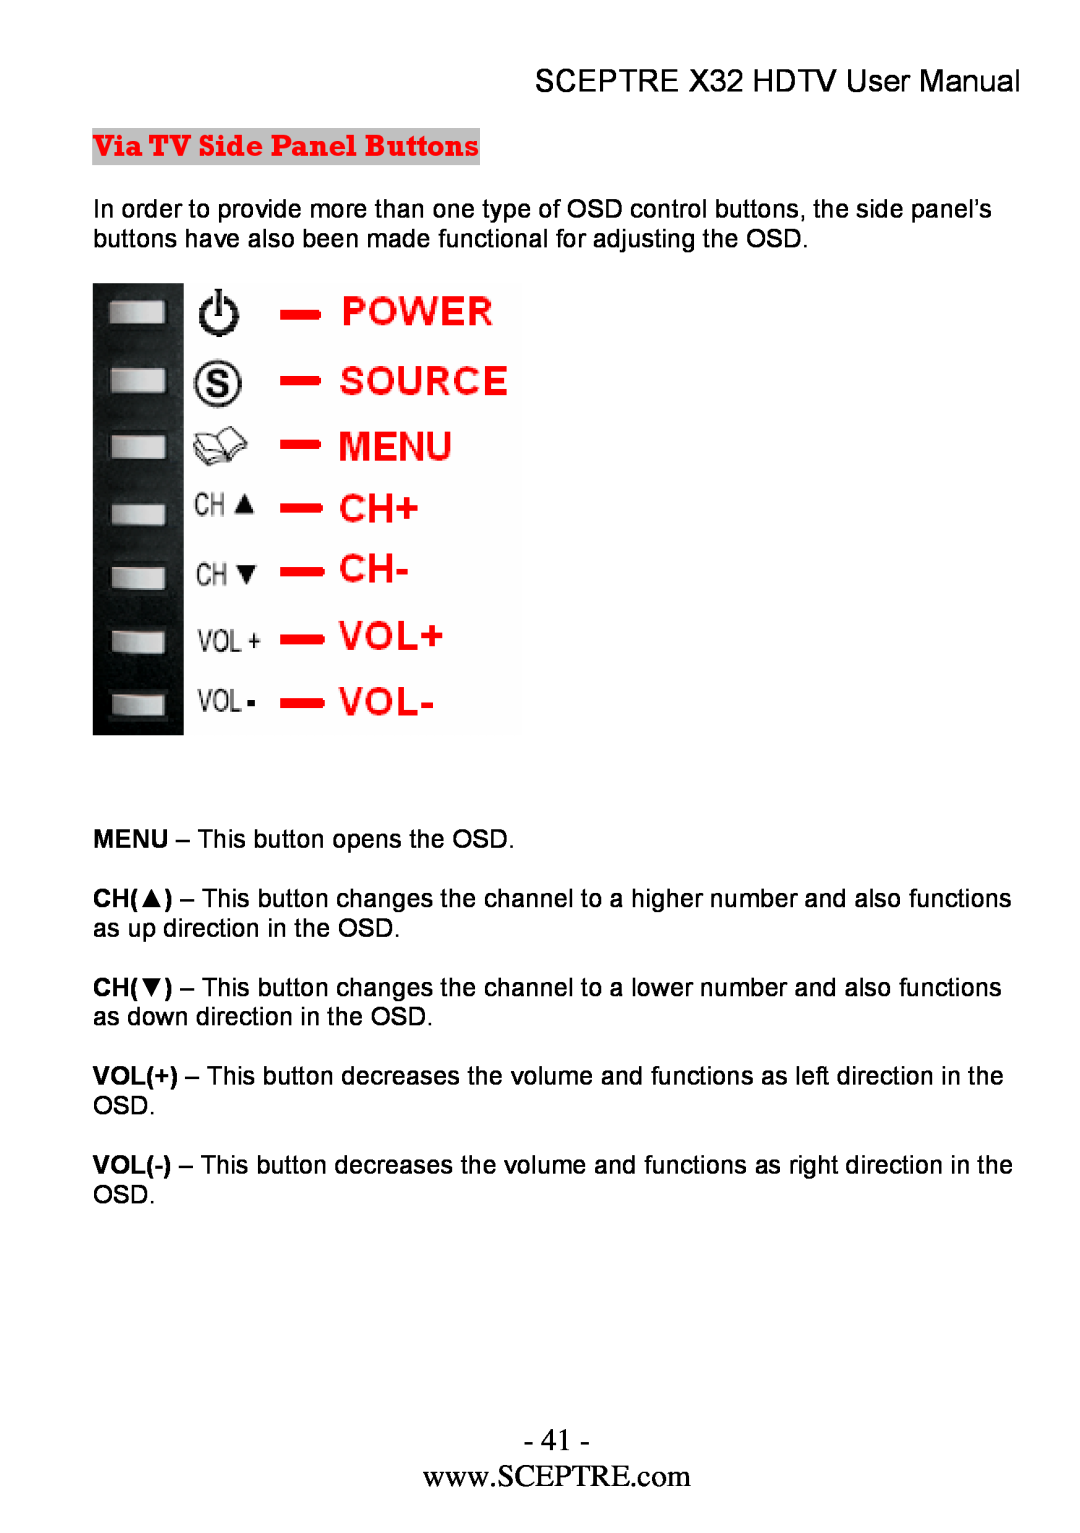 Sceptre Technologies x32 user manual Via TV Side Panel Buttons, SCEPTRE X32 HDTV User Manual 